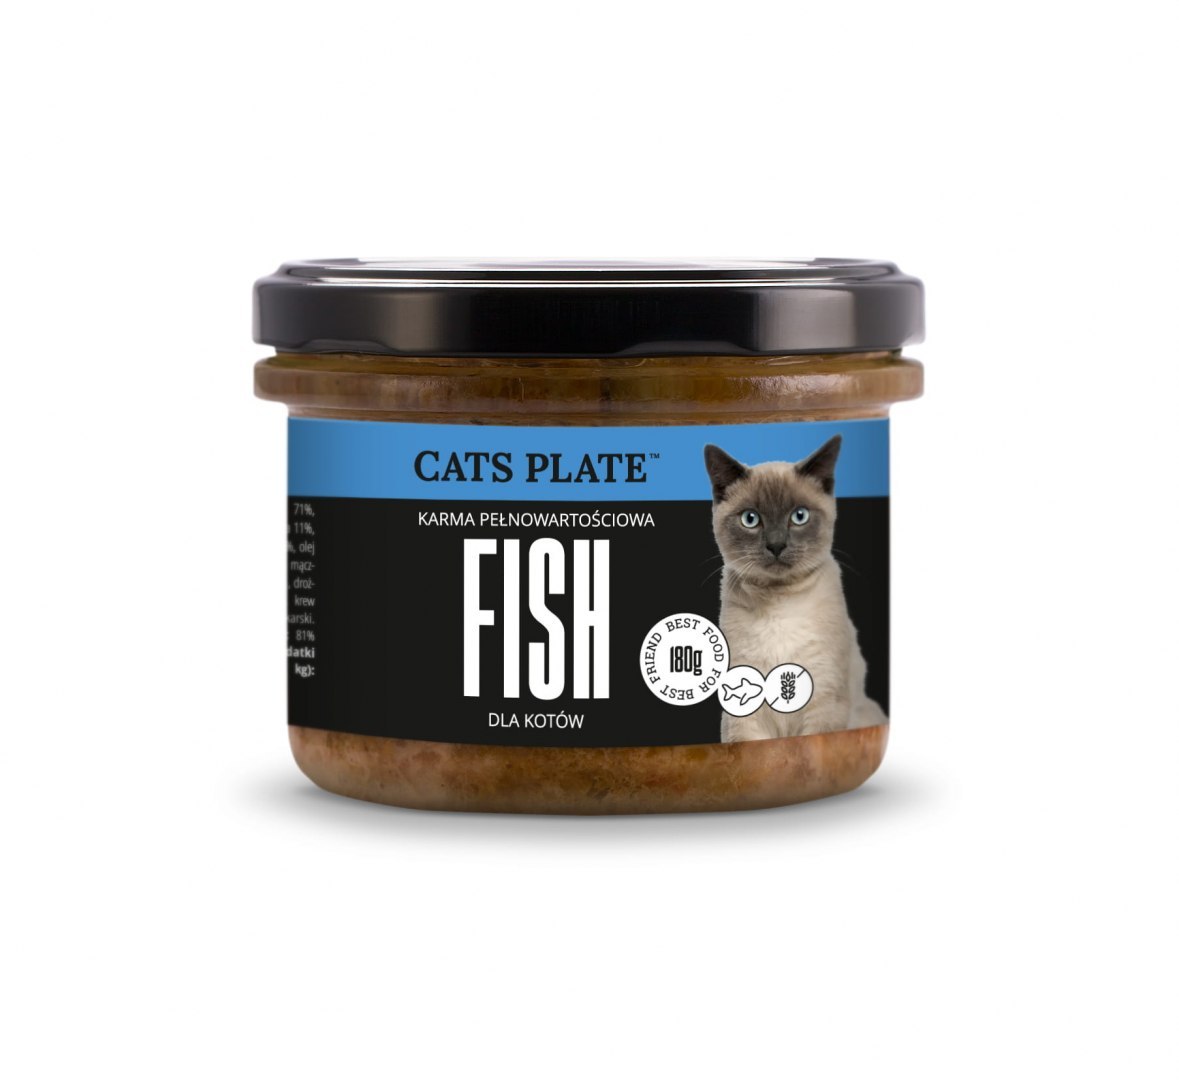 Cats Plate Fish - Filet z Dorsza (180g)